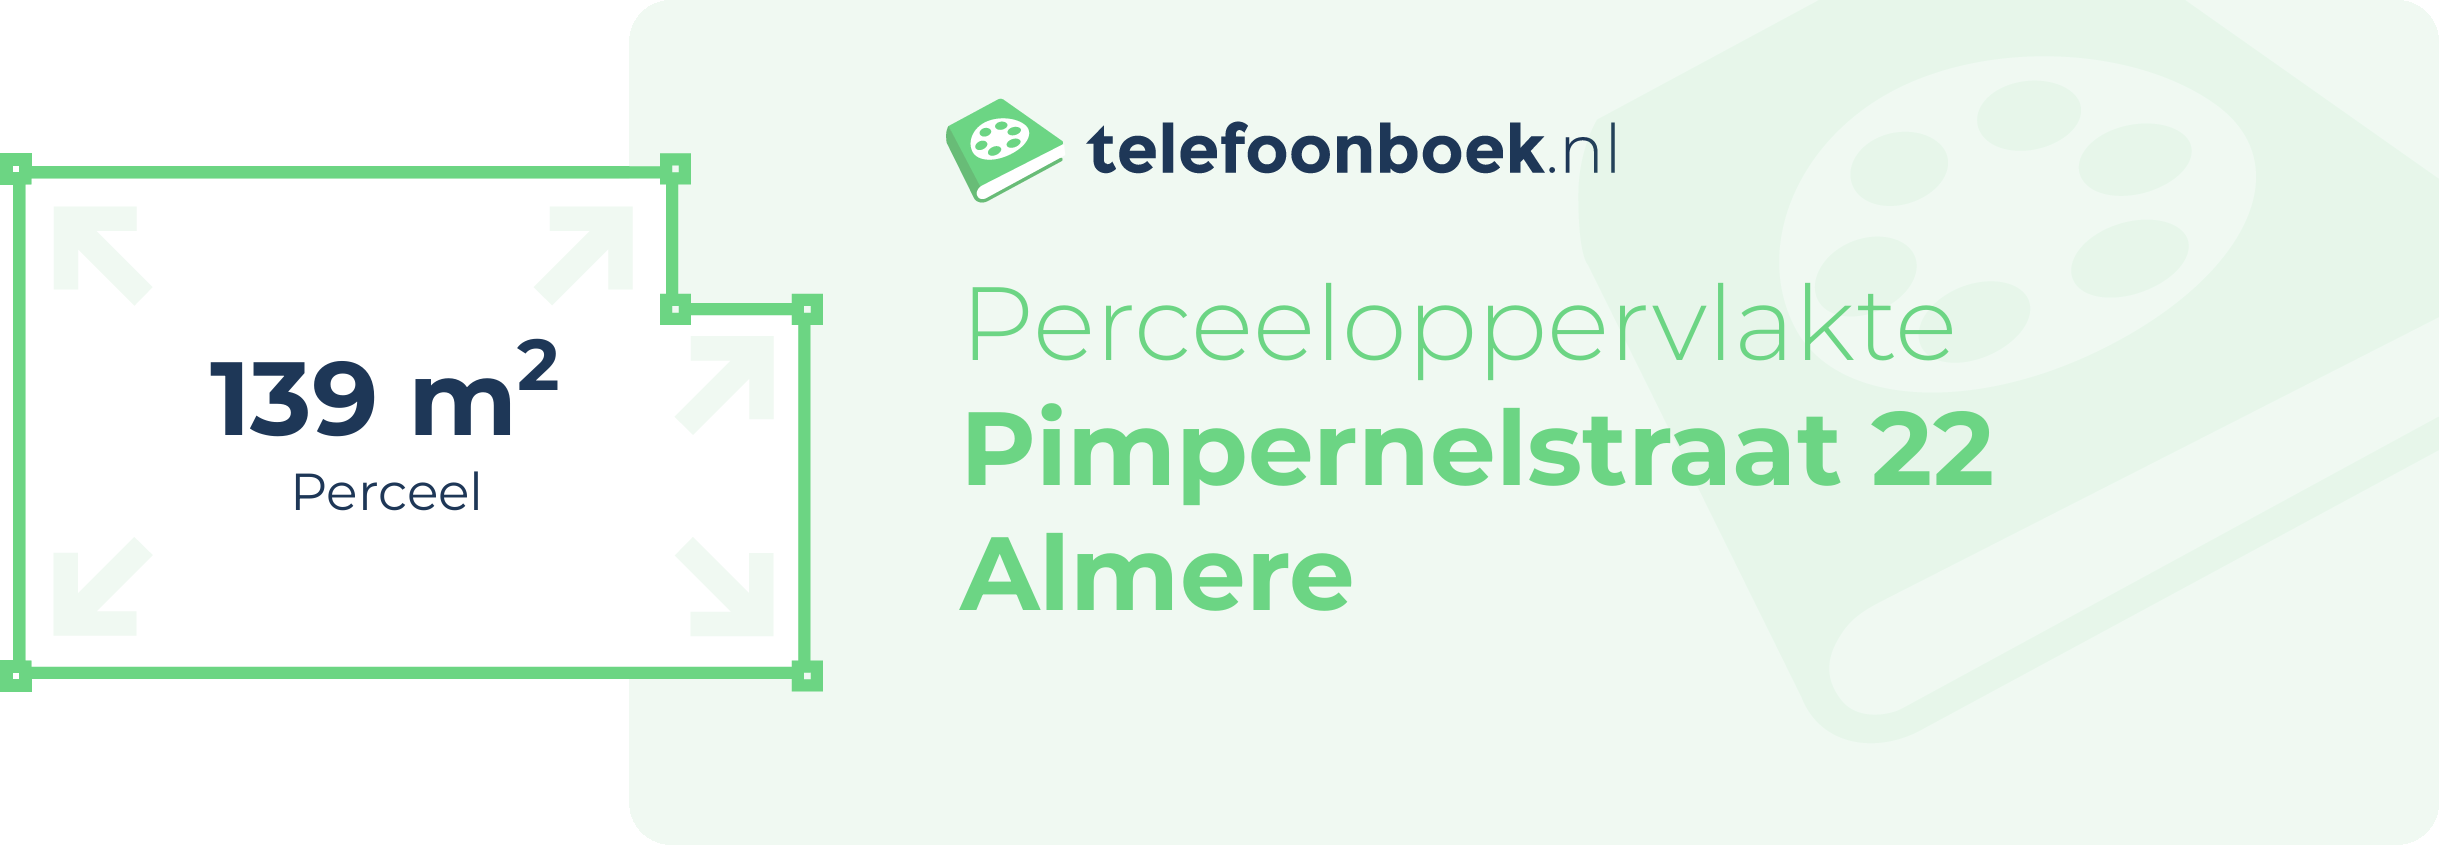 Perceeloppervlakte Pimpernelstraat 22 Almere